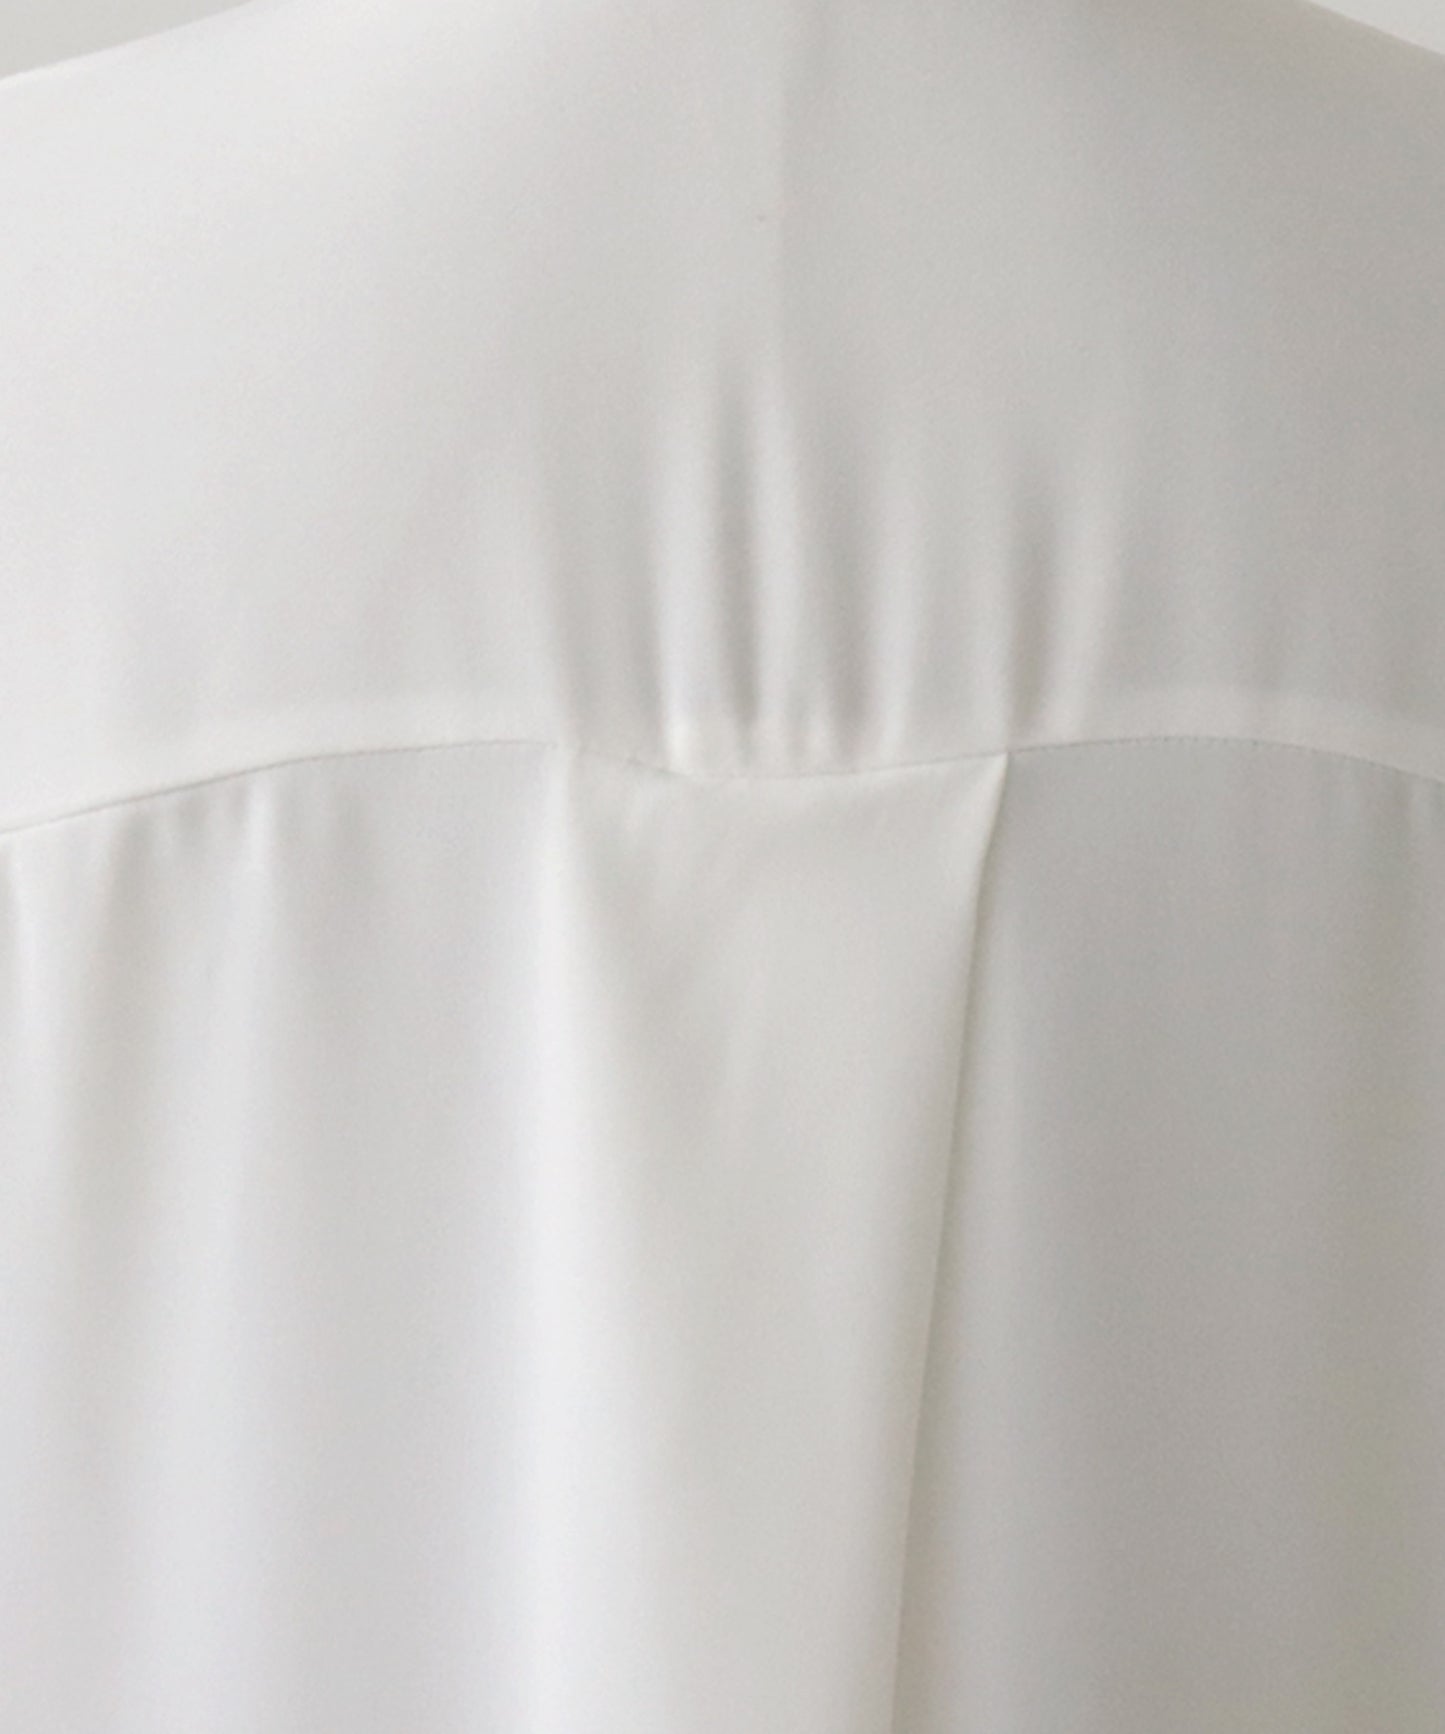 Ladies Long Casual Shirt dress Long-Sleeve Stand collar